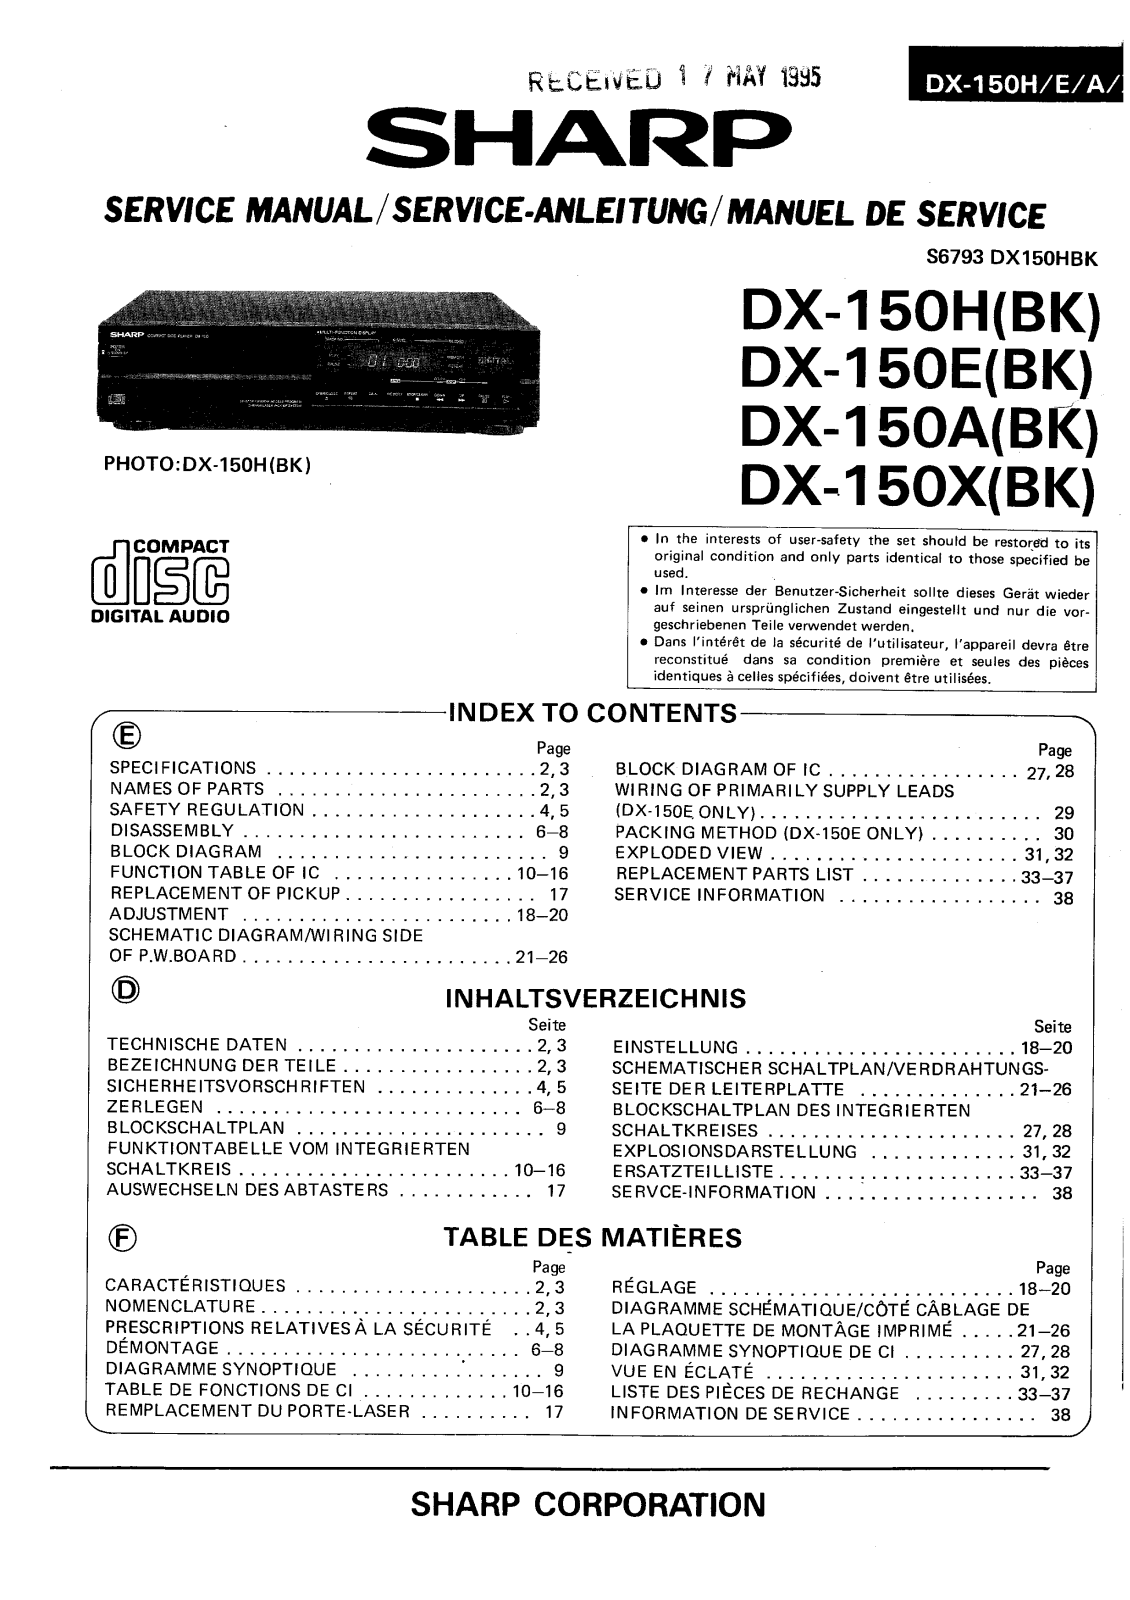 Sharp DX-150-E, DX-150-A, DX-150-H, DX-150-X Service manual